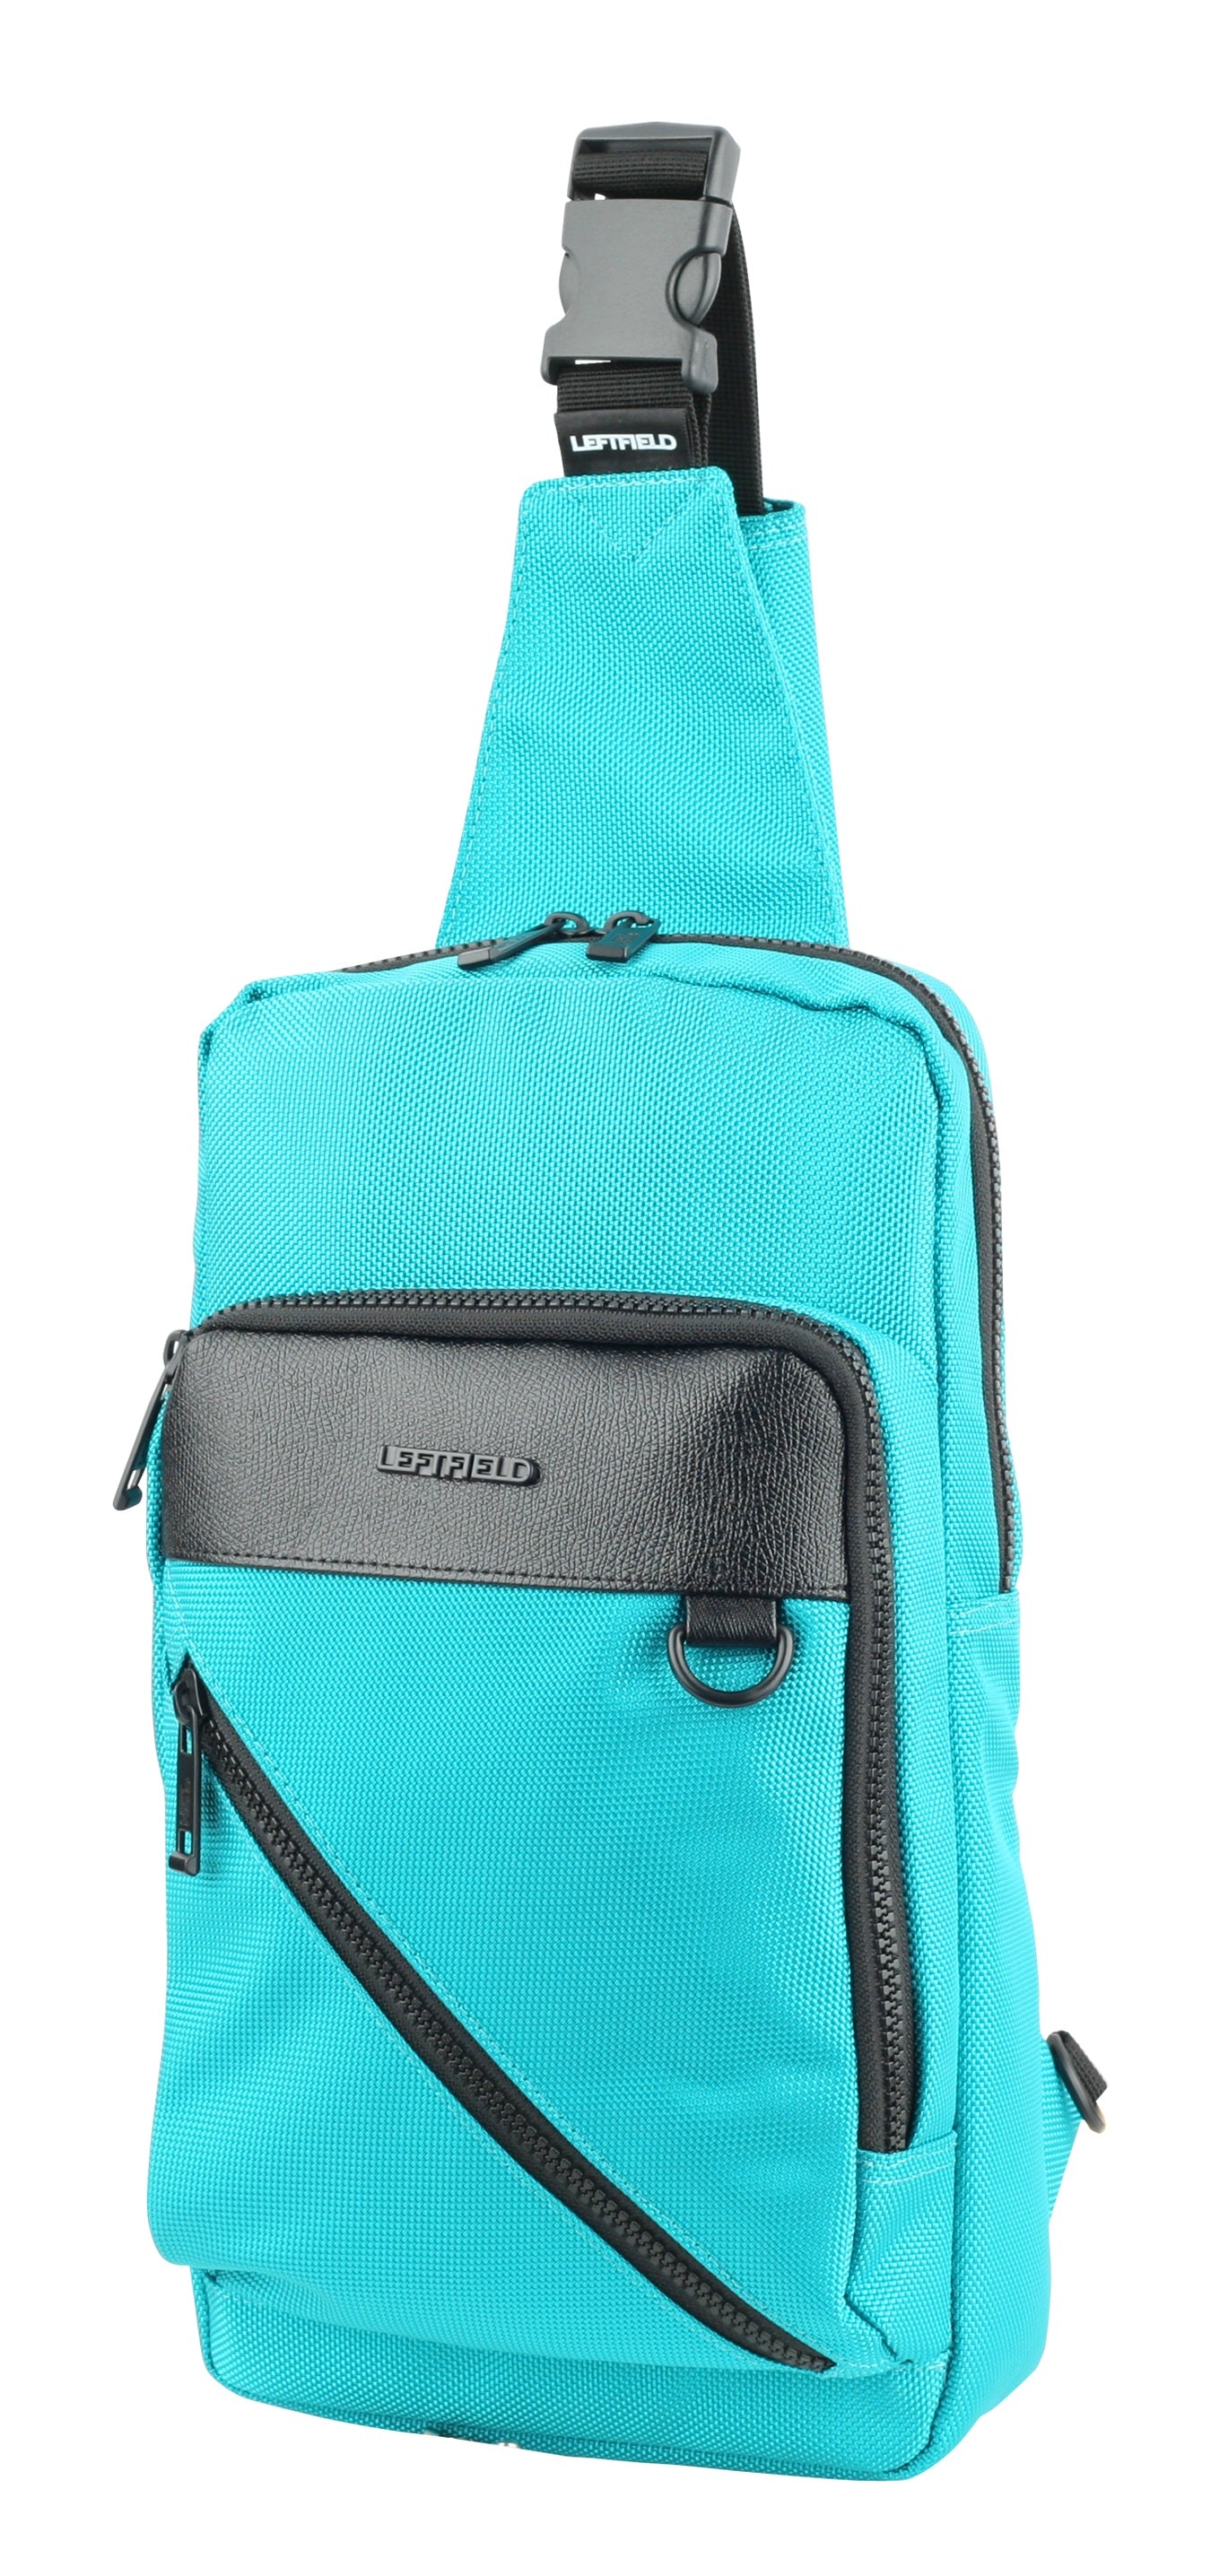 Aqua Sling Packs Messenger Bags